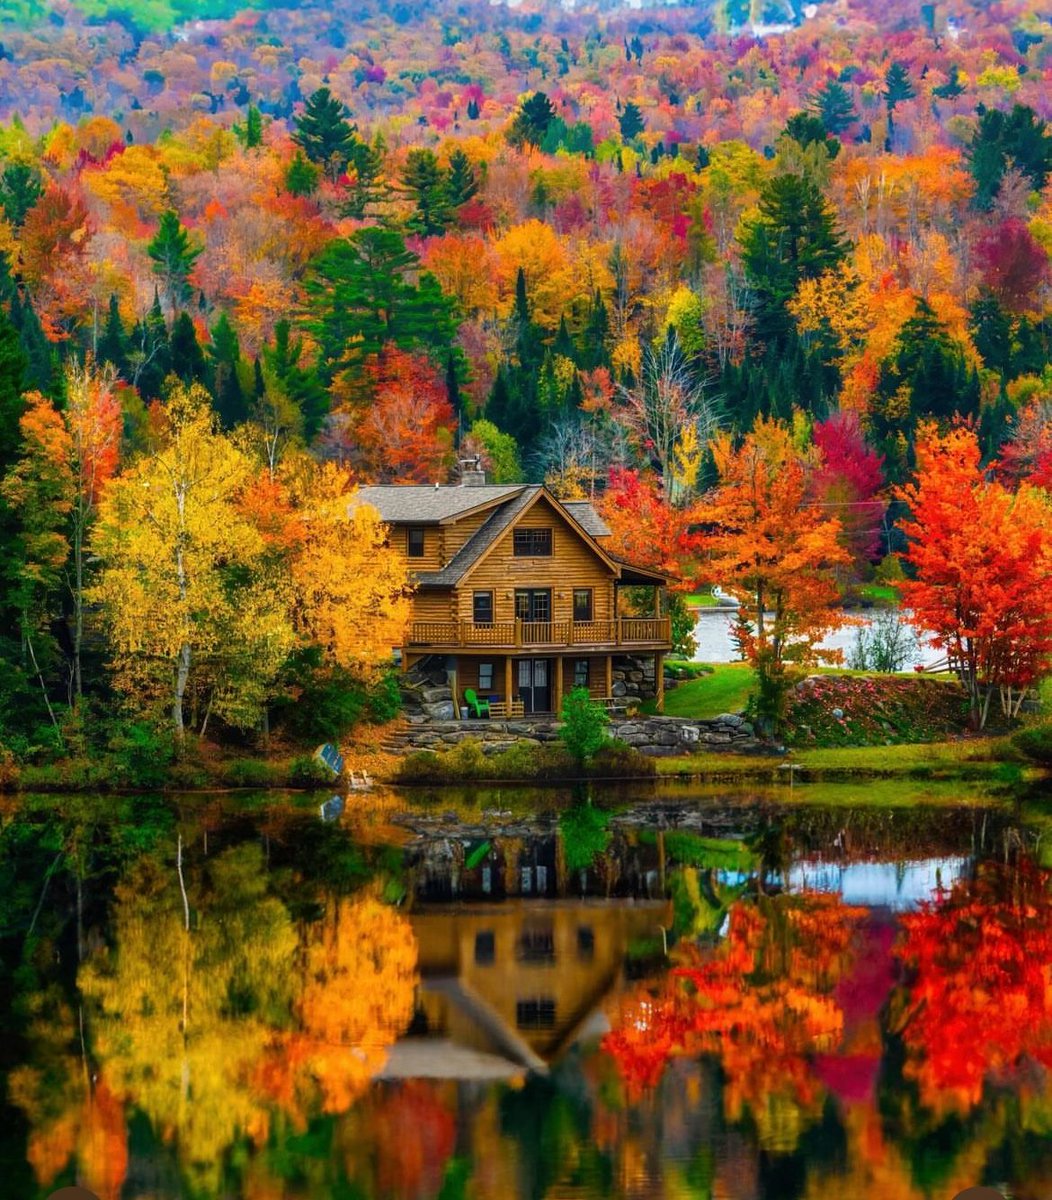 Beautiful colors and reflection
Lake Eden, Vermont, United States 
📷: Mansur Ali Jisan 
#UnitedStates 🇺🇸 #Vermont #lakeeden #lake #NewYorkCity #autumnvibes #Autumn #AutumnFalls #winter #autumnstyle #autumnlovers #nature #december #traveling #travelphotography